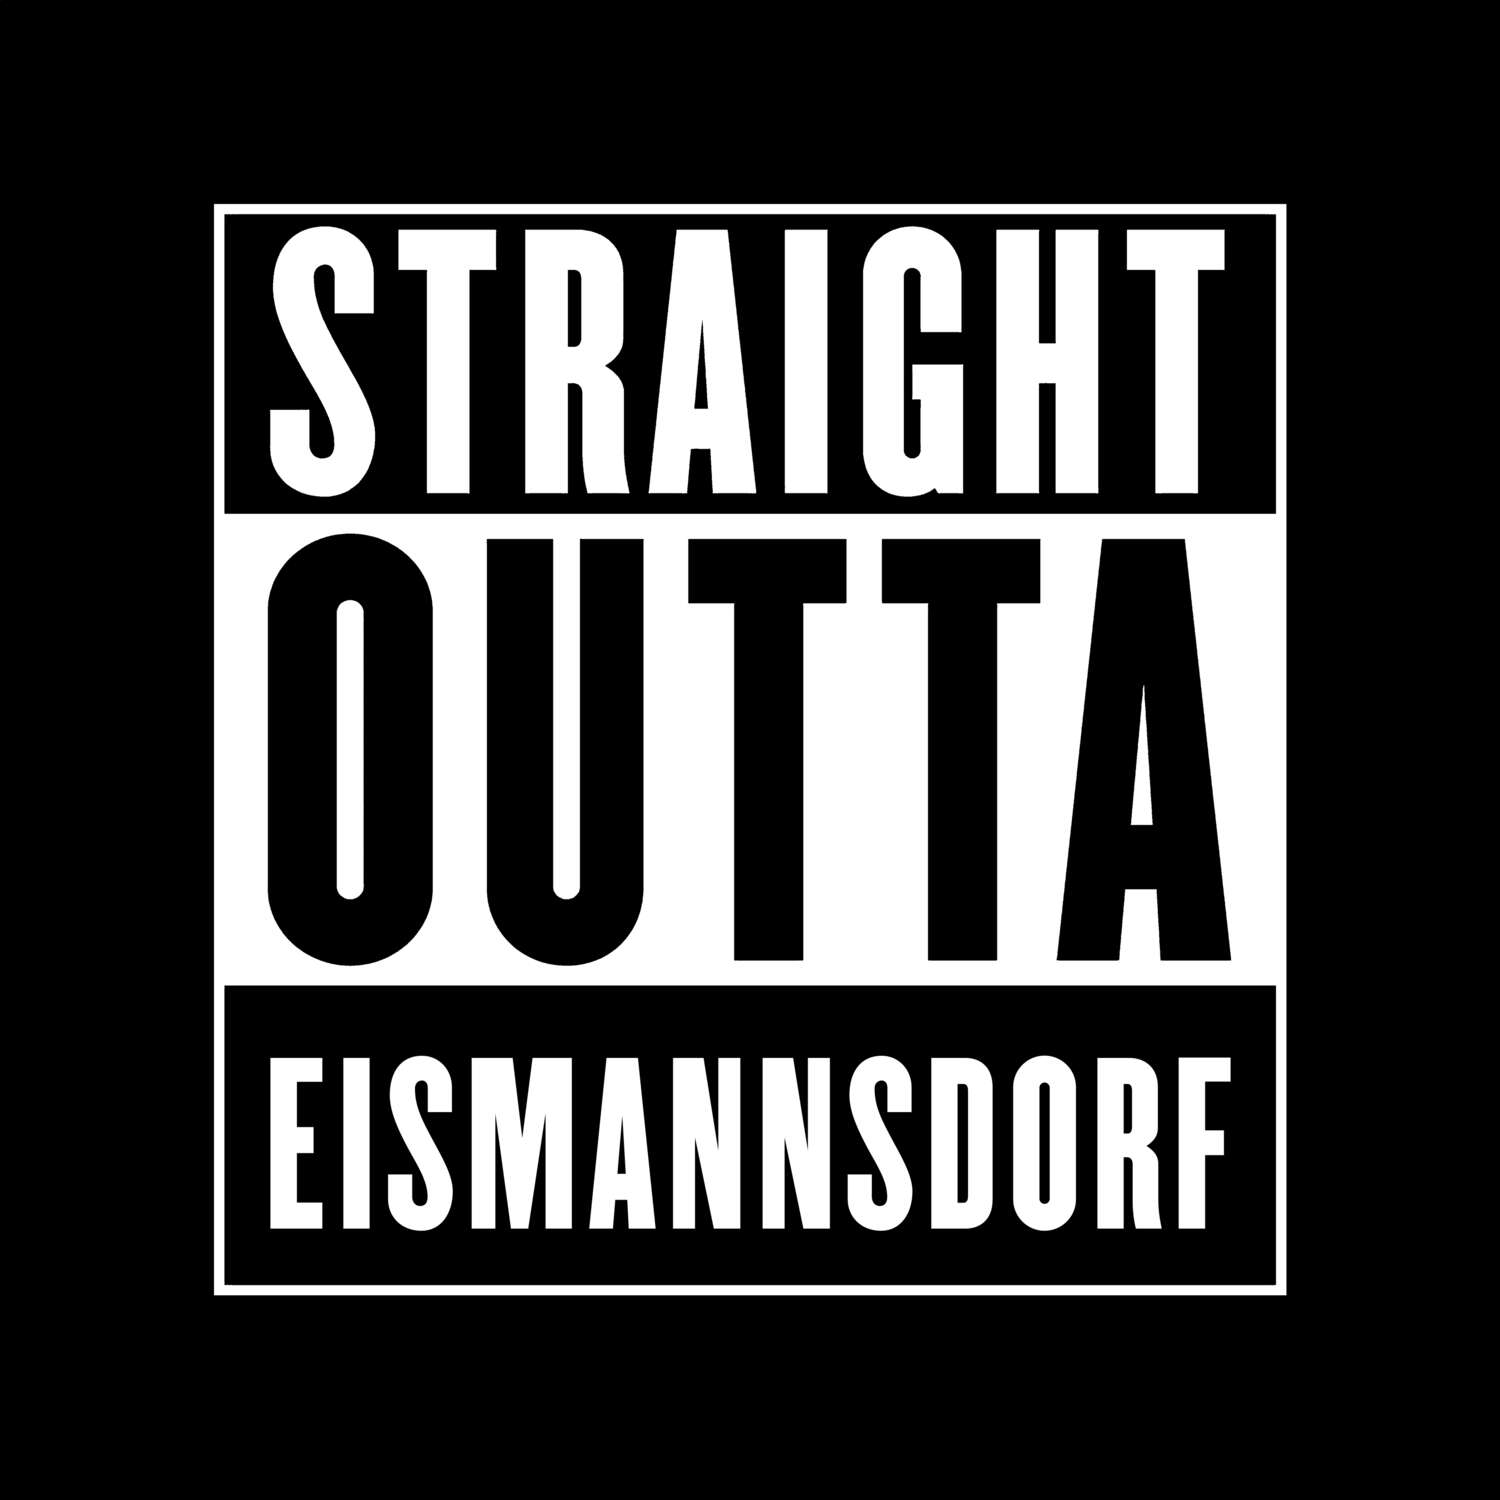 Eismannsdorf T-Shirt »Straight Outta«